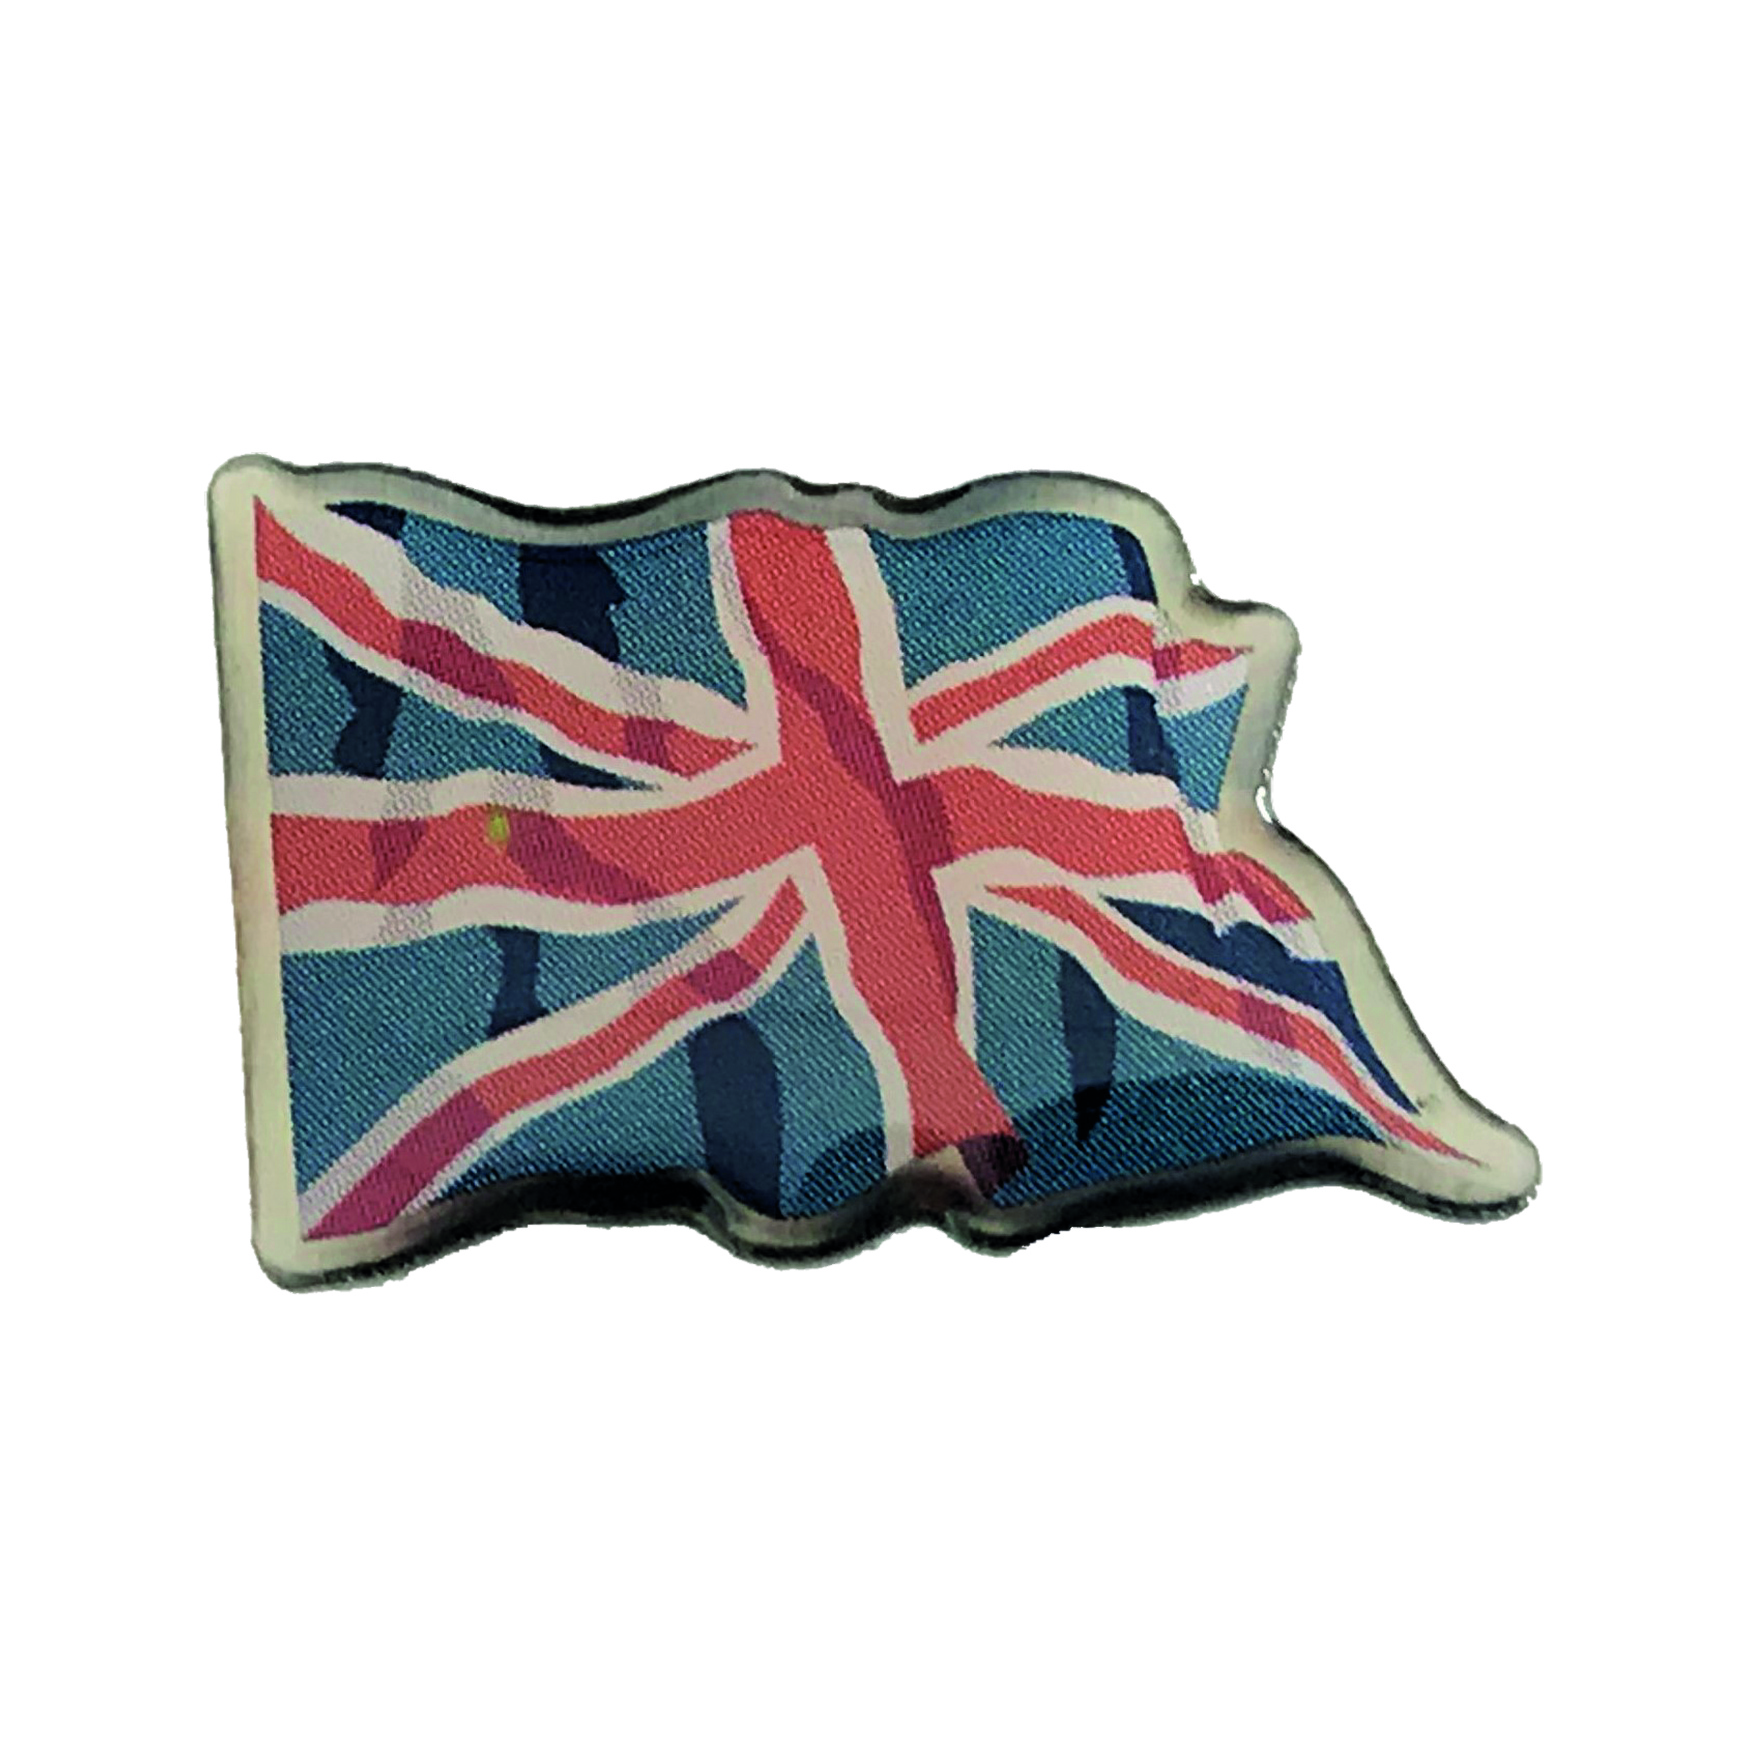 Union Jack Pin Badge